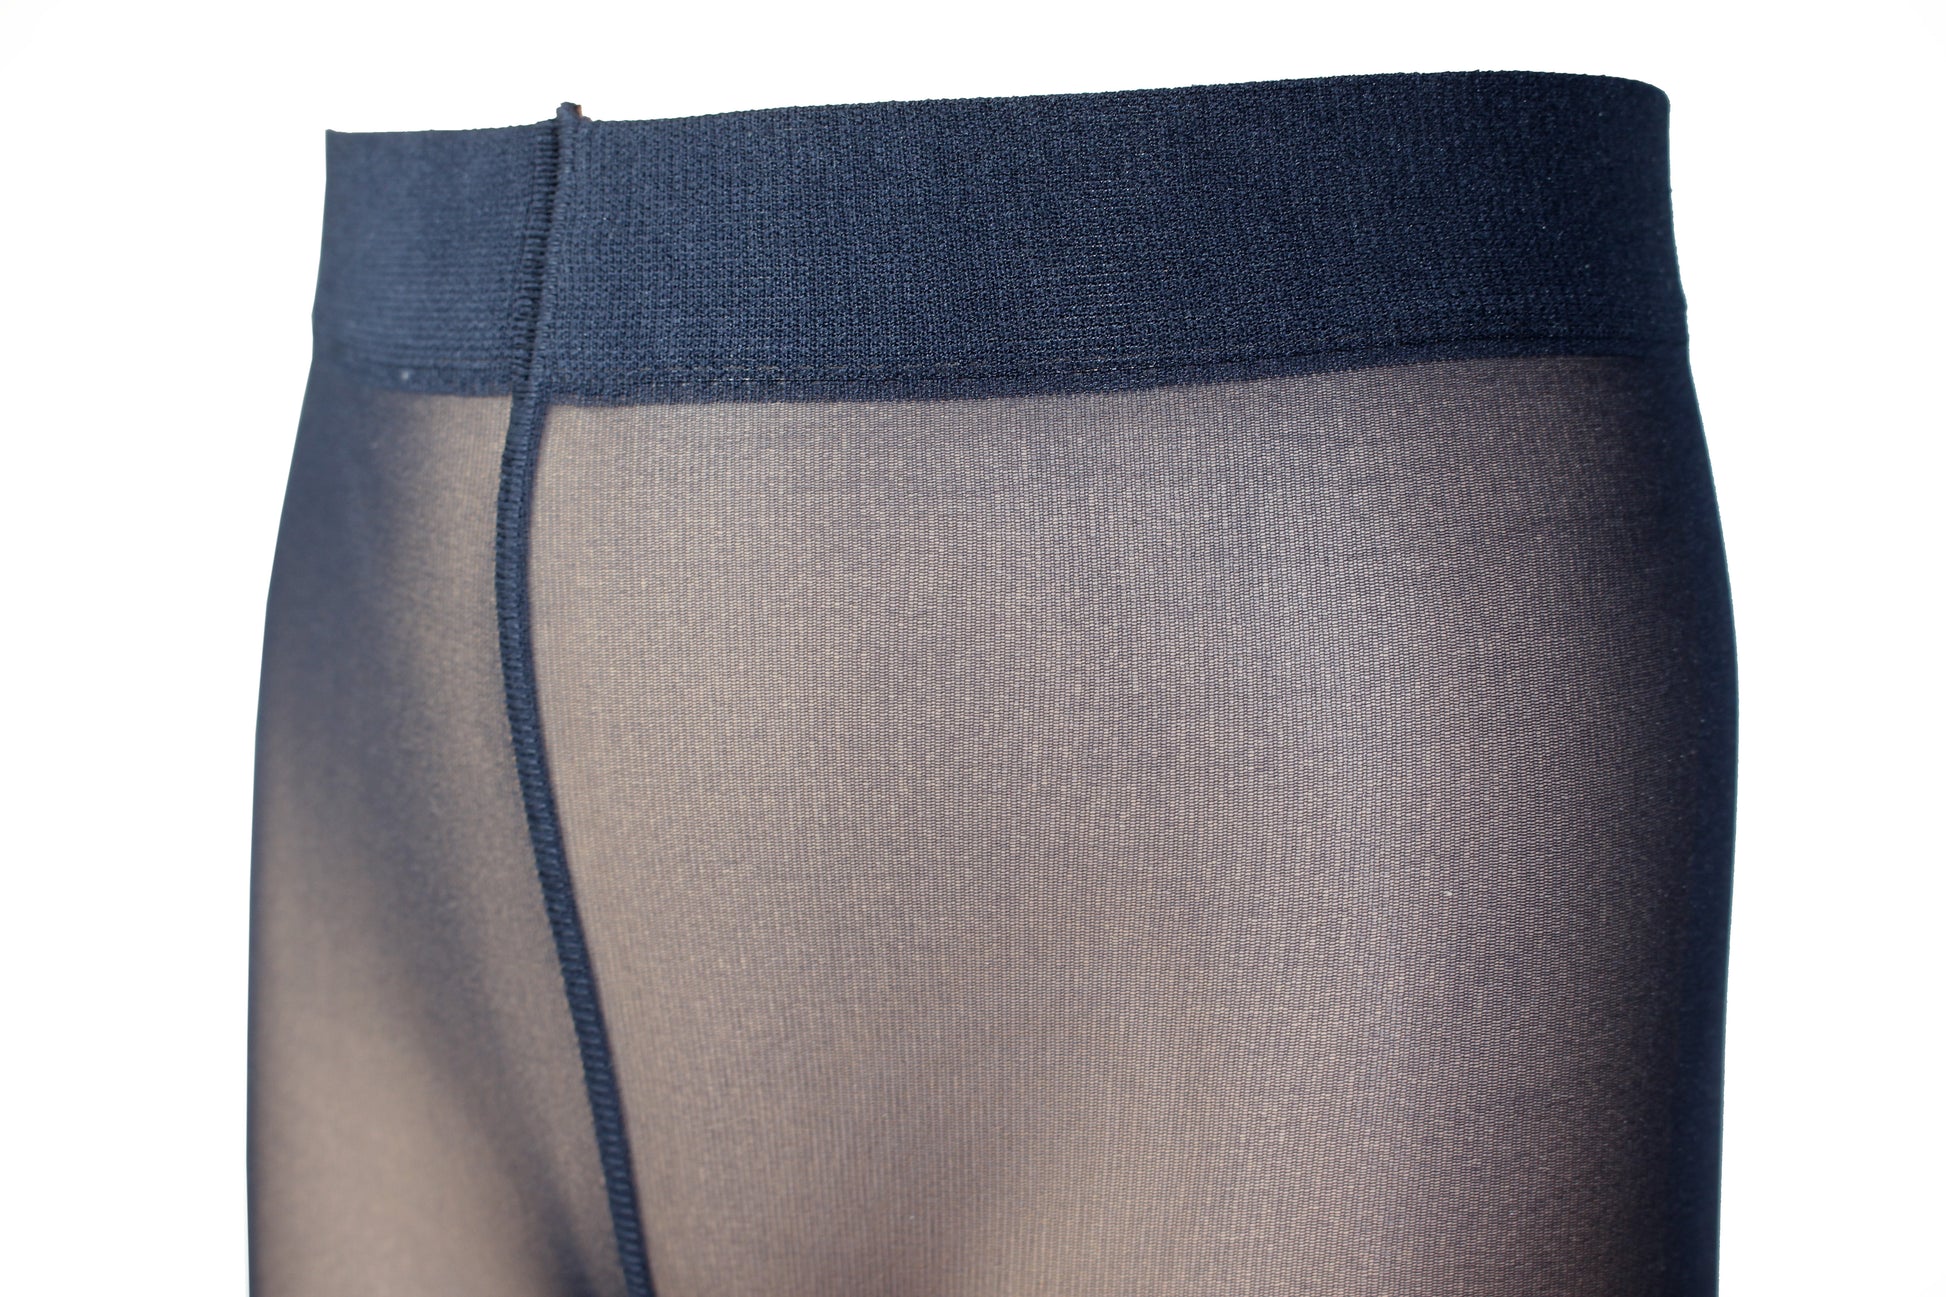 Omsa MiniVelour 25 Tights - Soft and matte semi sheer plain kid's tights in navy plain waistband.